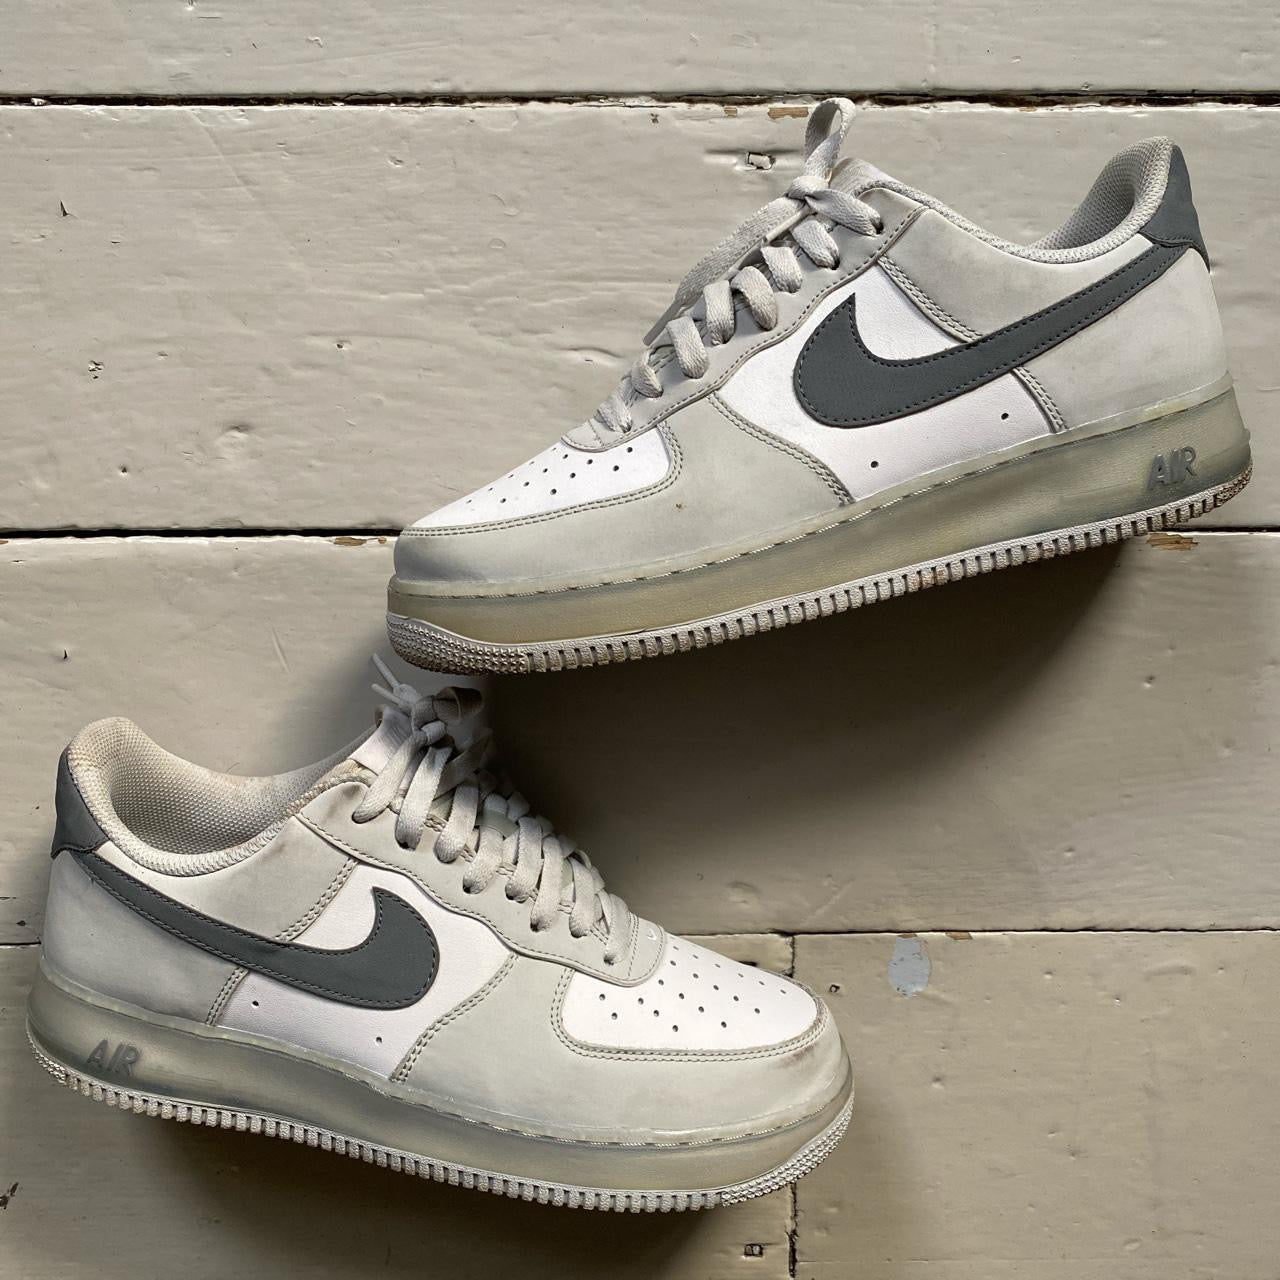 Nike Air Force 1 Grey and White (UK 9)